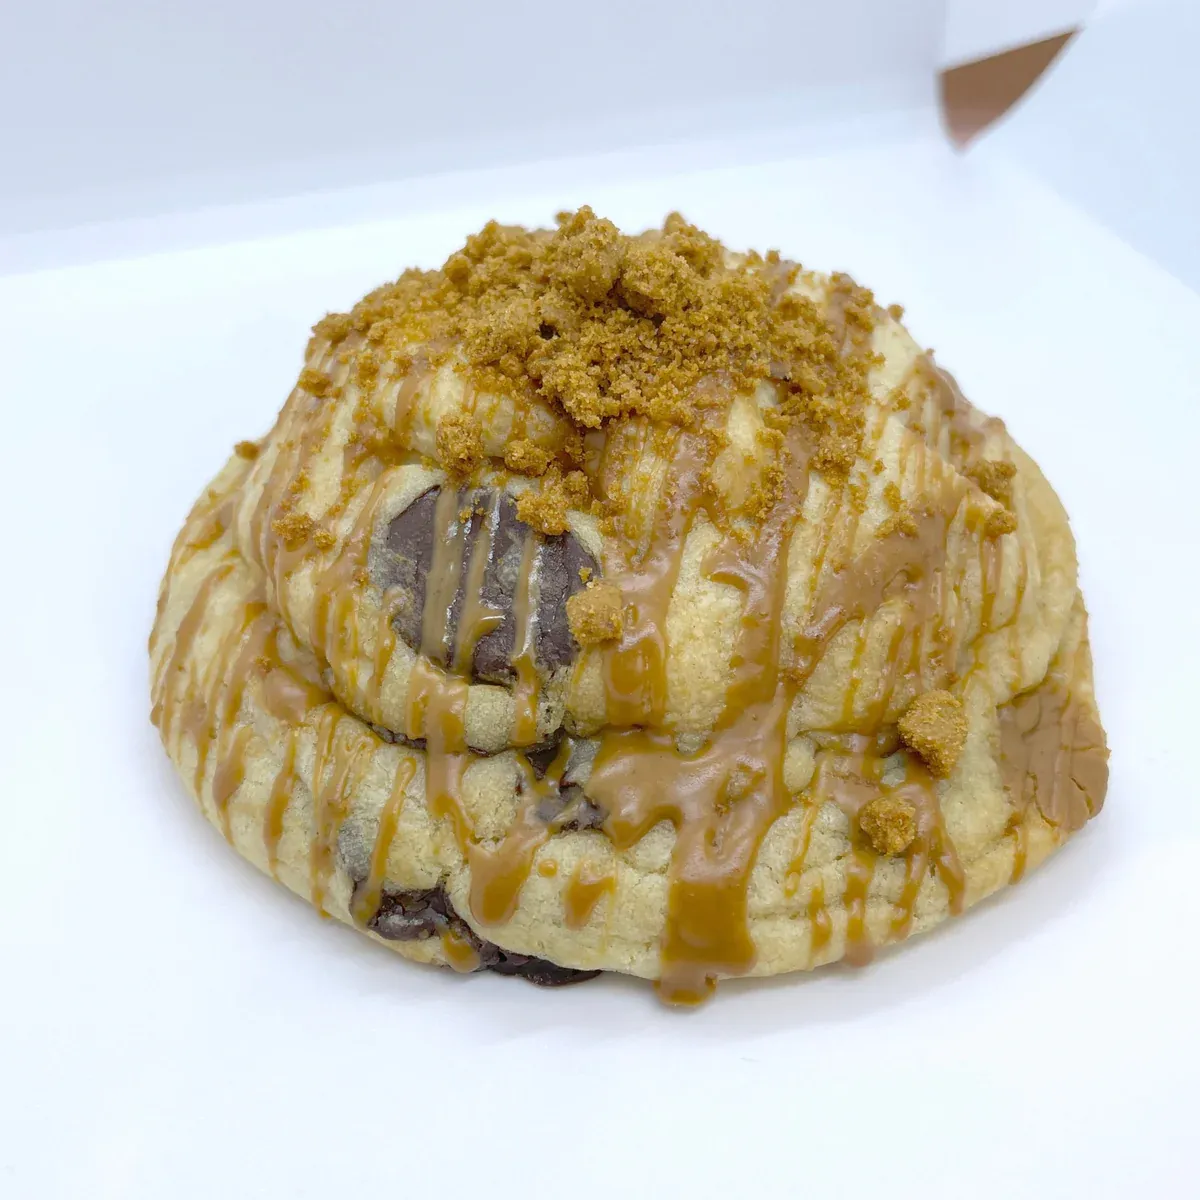 The Lotus Biscoff Stuffed Cookie by Gimmie Brownies, UK